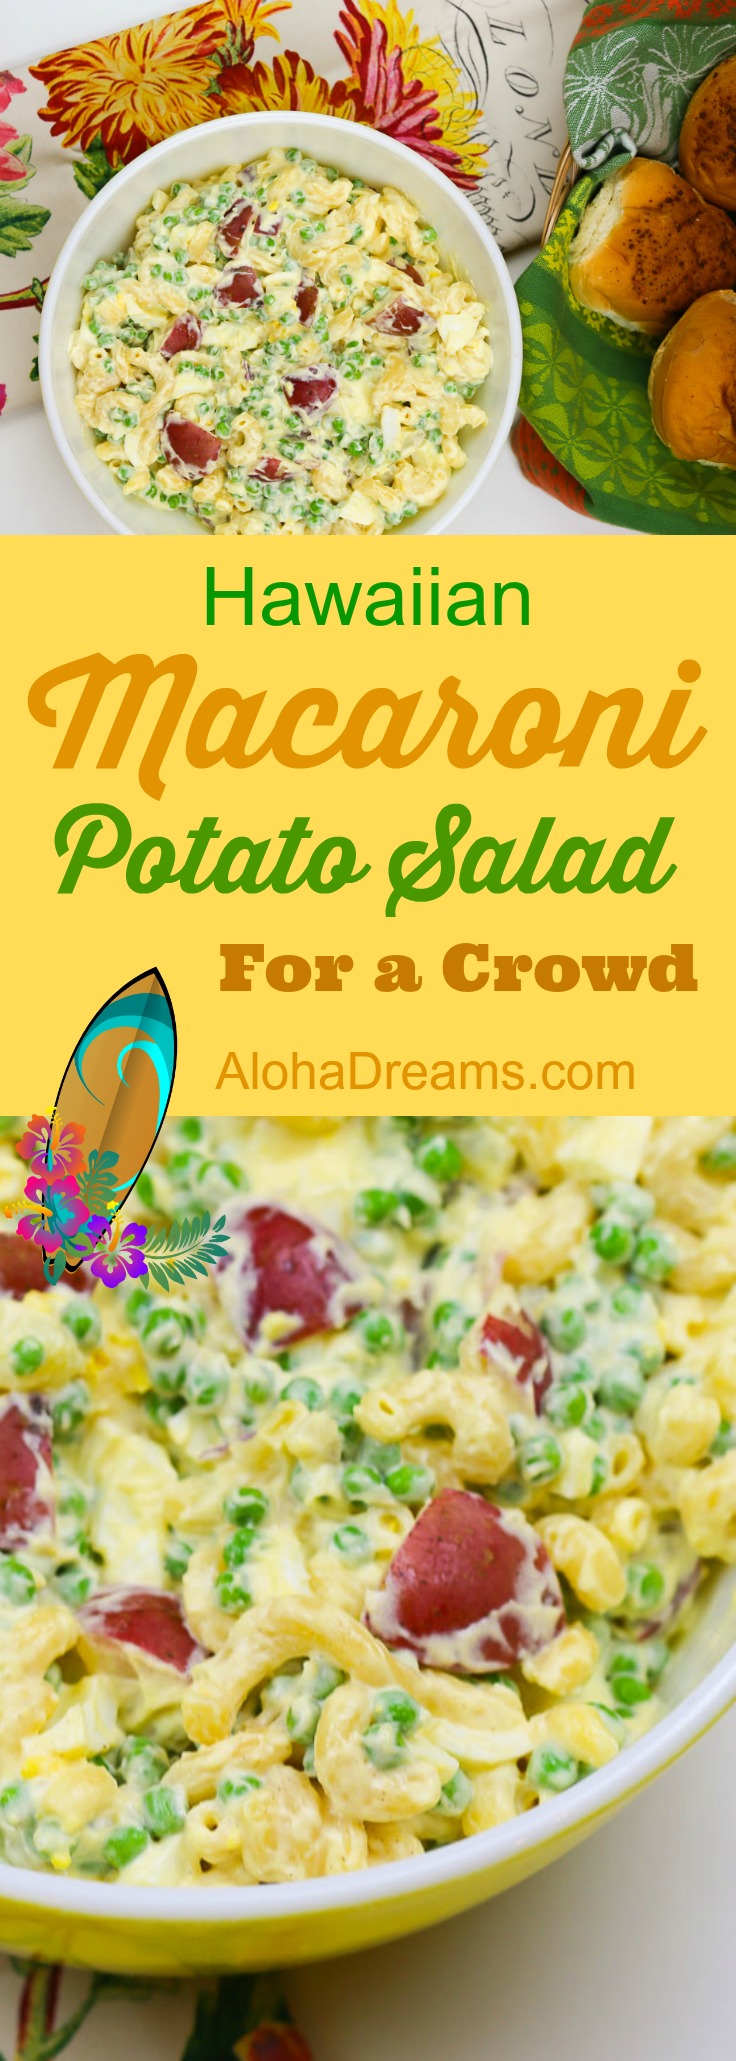 Macaroni Potato Salad